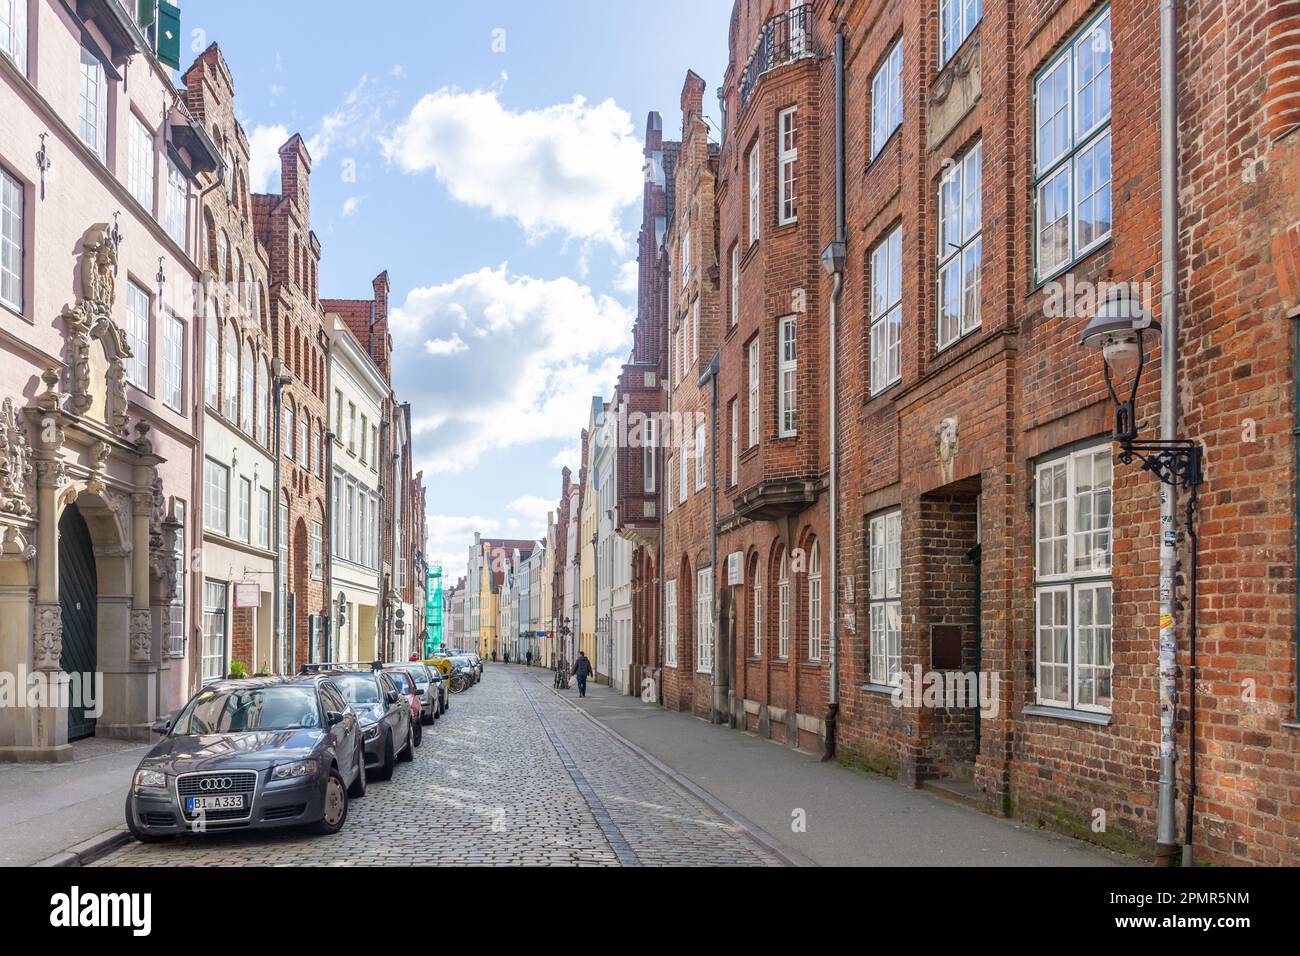 Edifici d'epoca, Glockengießerstraße, Lübeck, Schleswig-Holstein, Repubblica federale di Germania Foto Stock